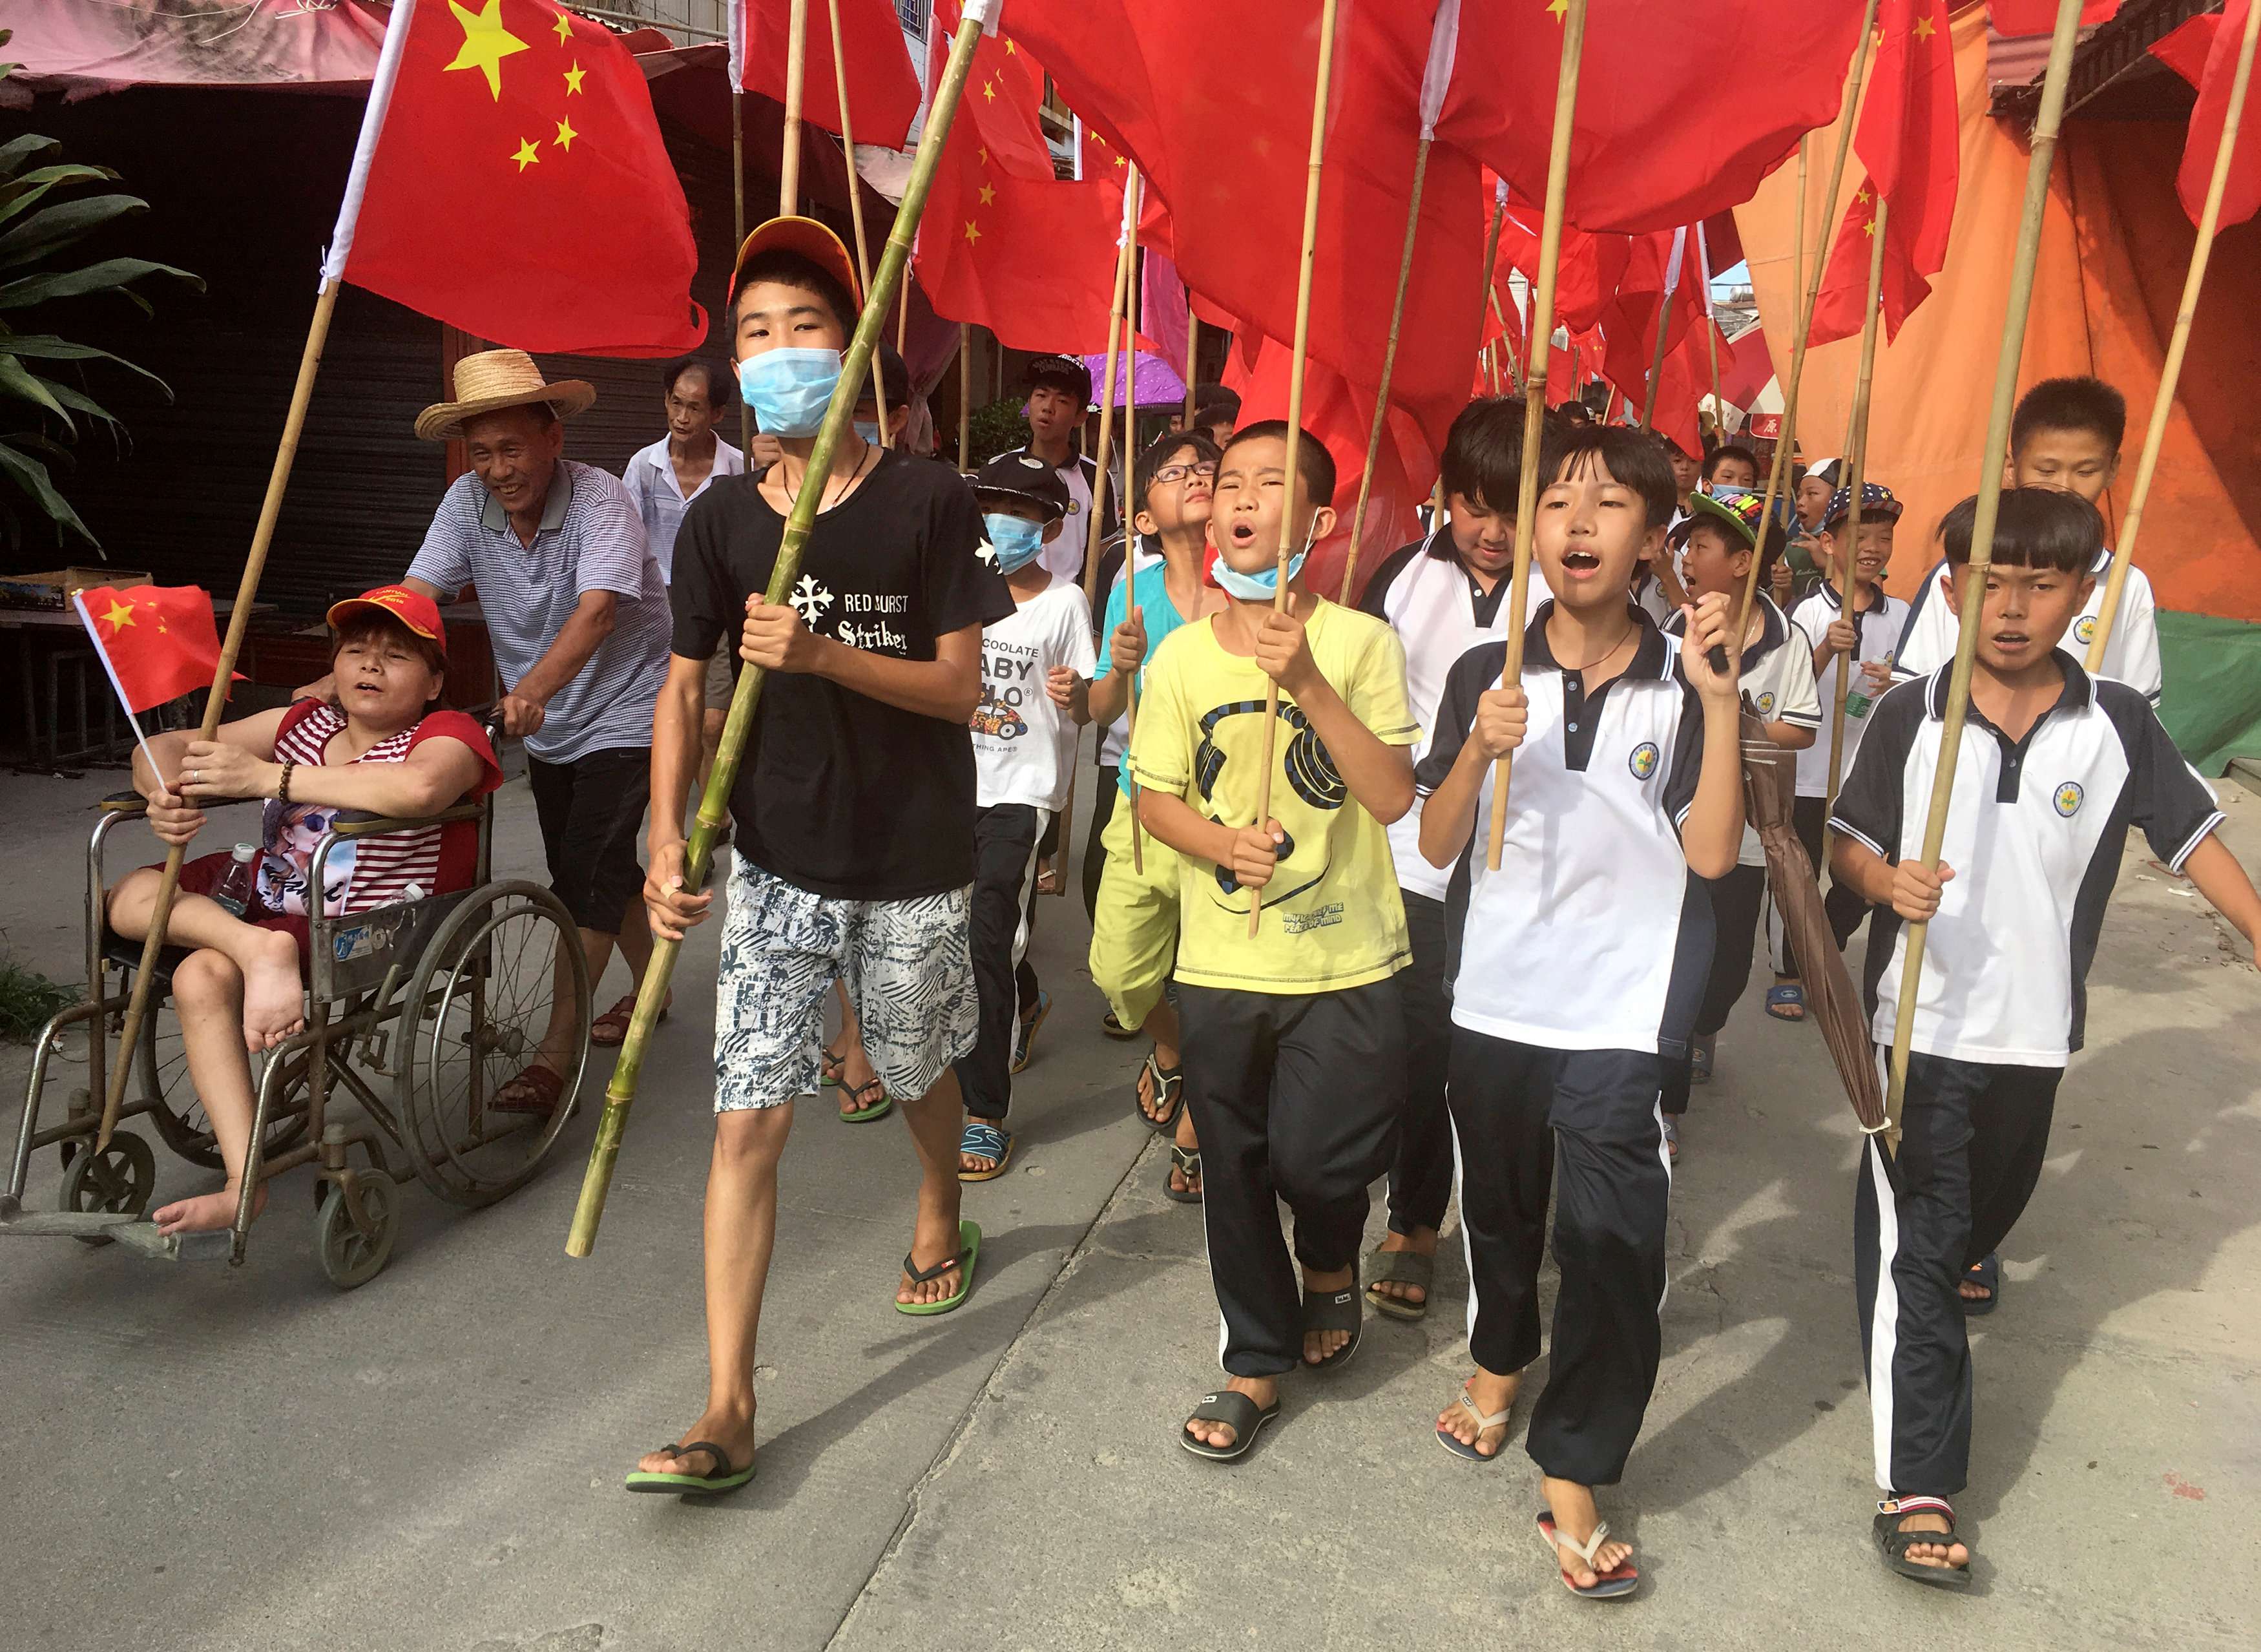 Villagers including schoolchildren took part in a protest in June, demanding the release of their village chief Lin Zuluan, in Wukan. Photo: Reuters